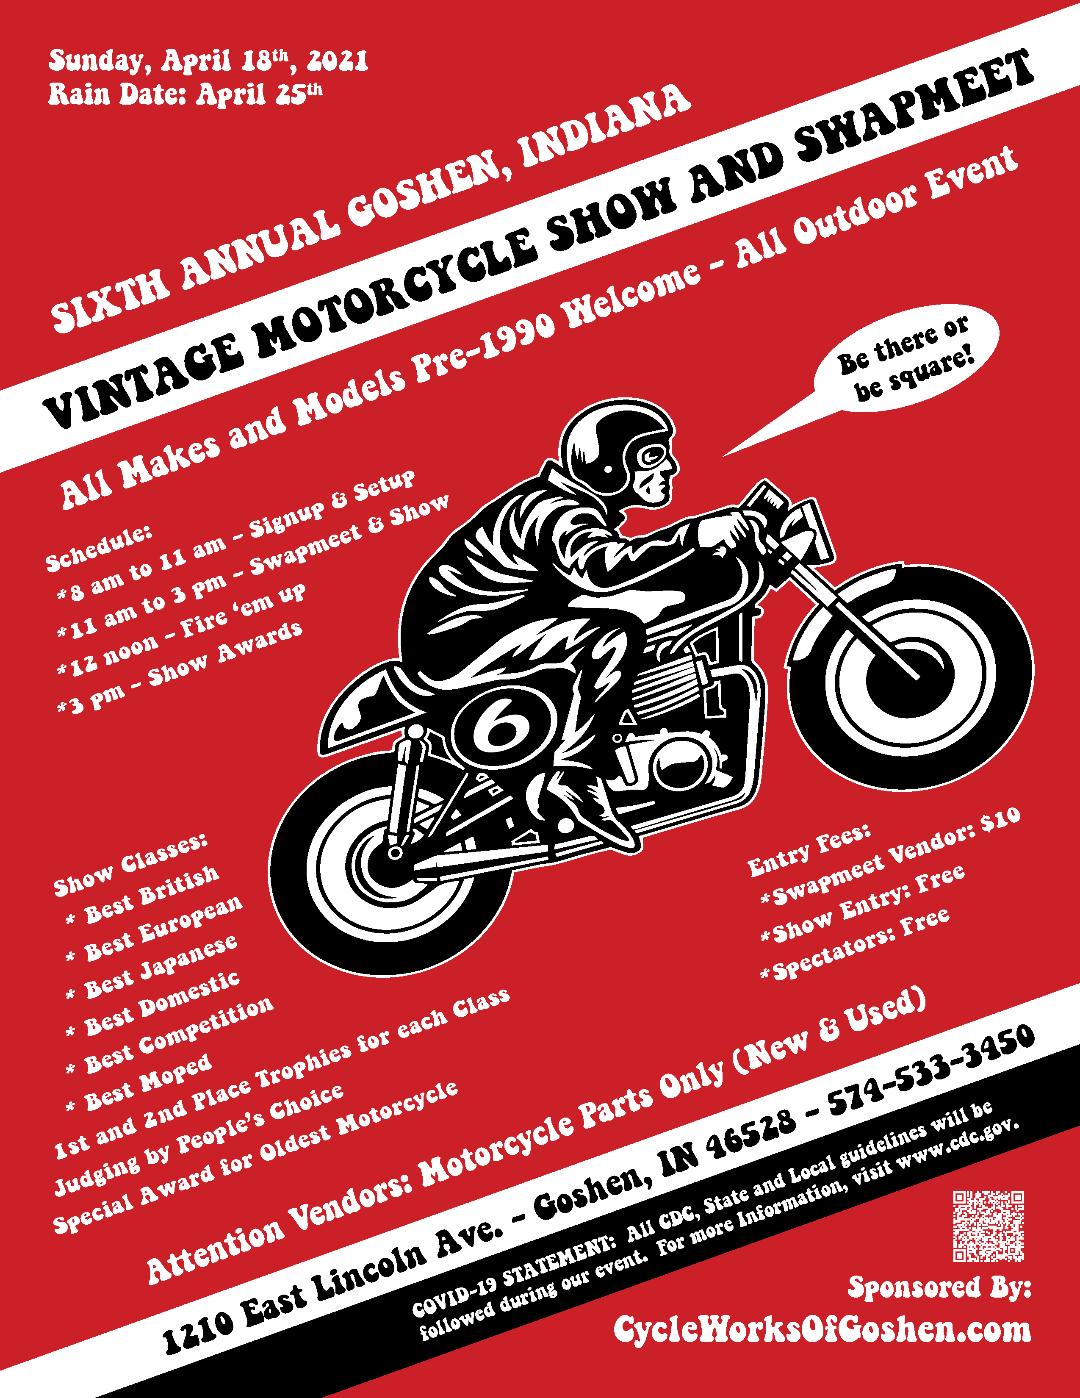 6th Annual Vintage Motorcycle Show/Swap Meet Motorcycle Roads